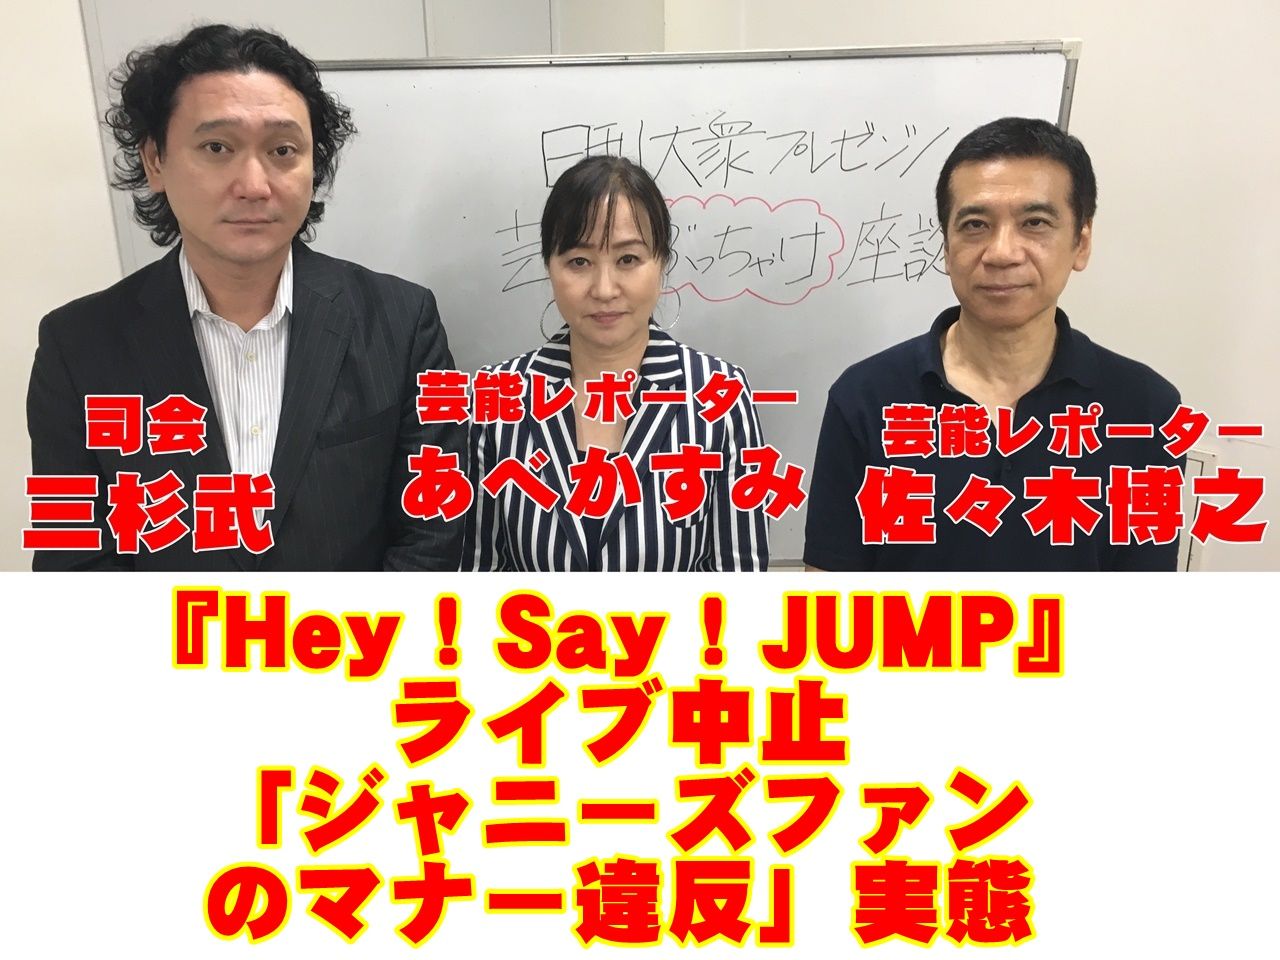 Hey Say Jump ライブ中止 ジャニーズファンのマナー違反 実態 日刊大衆